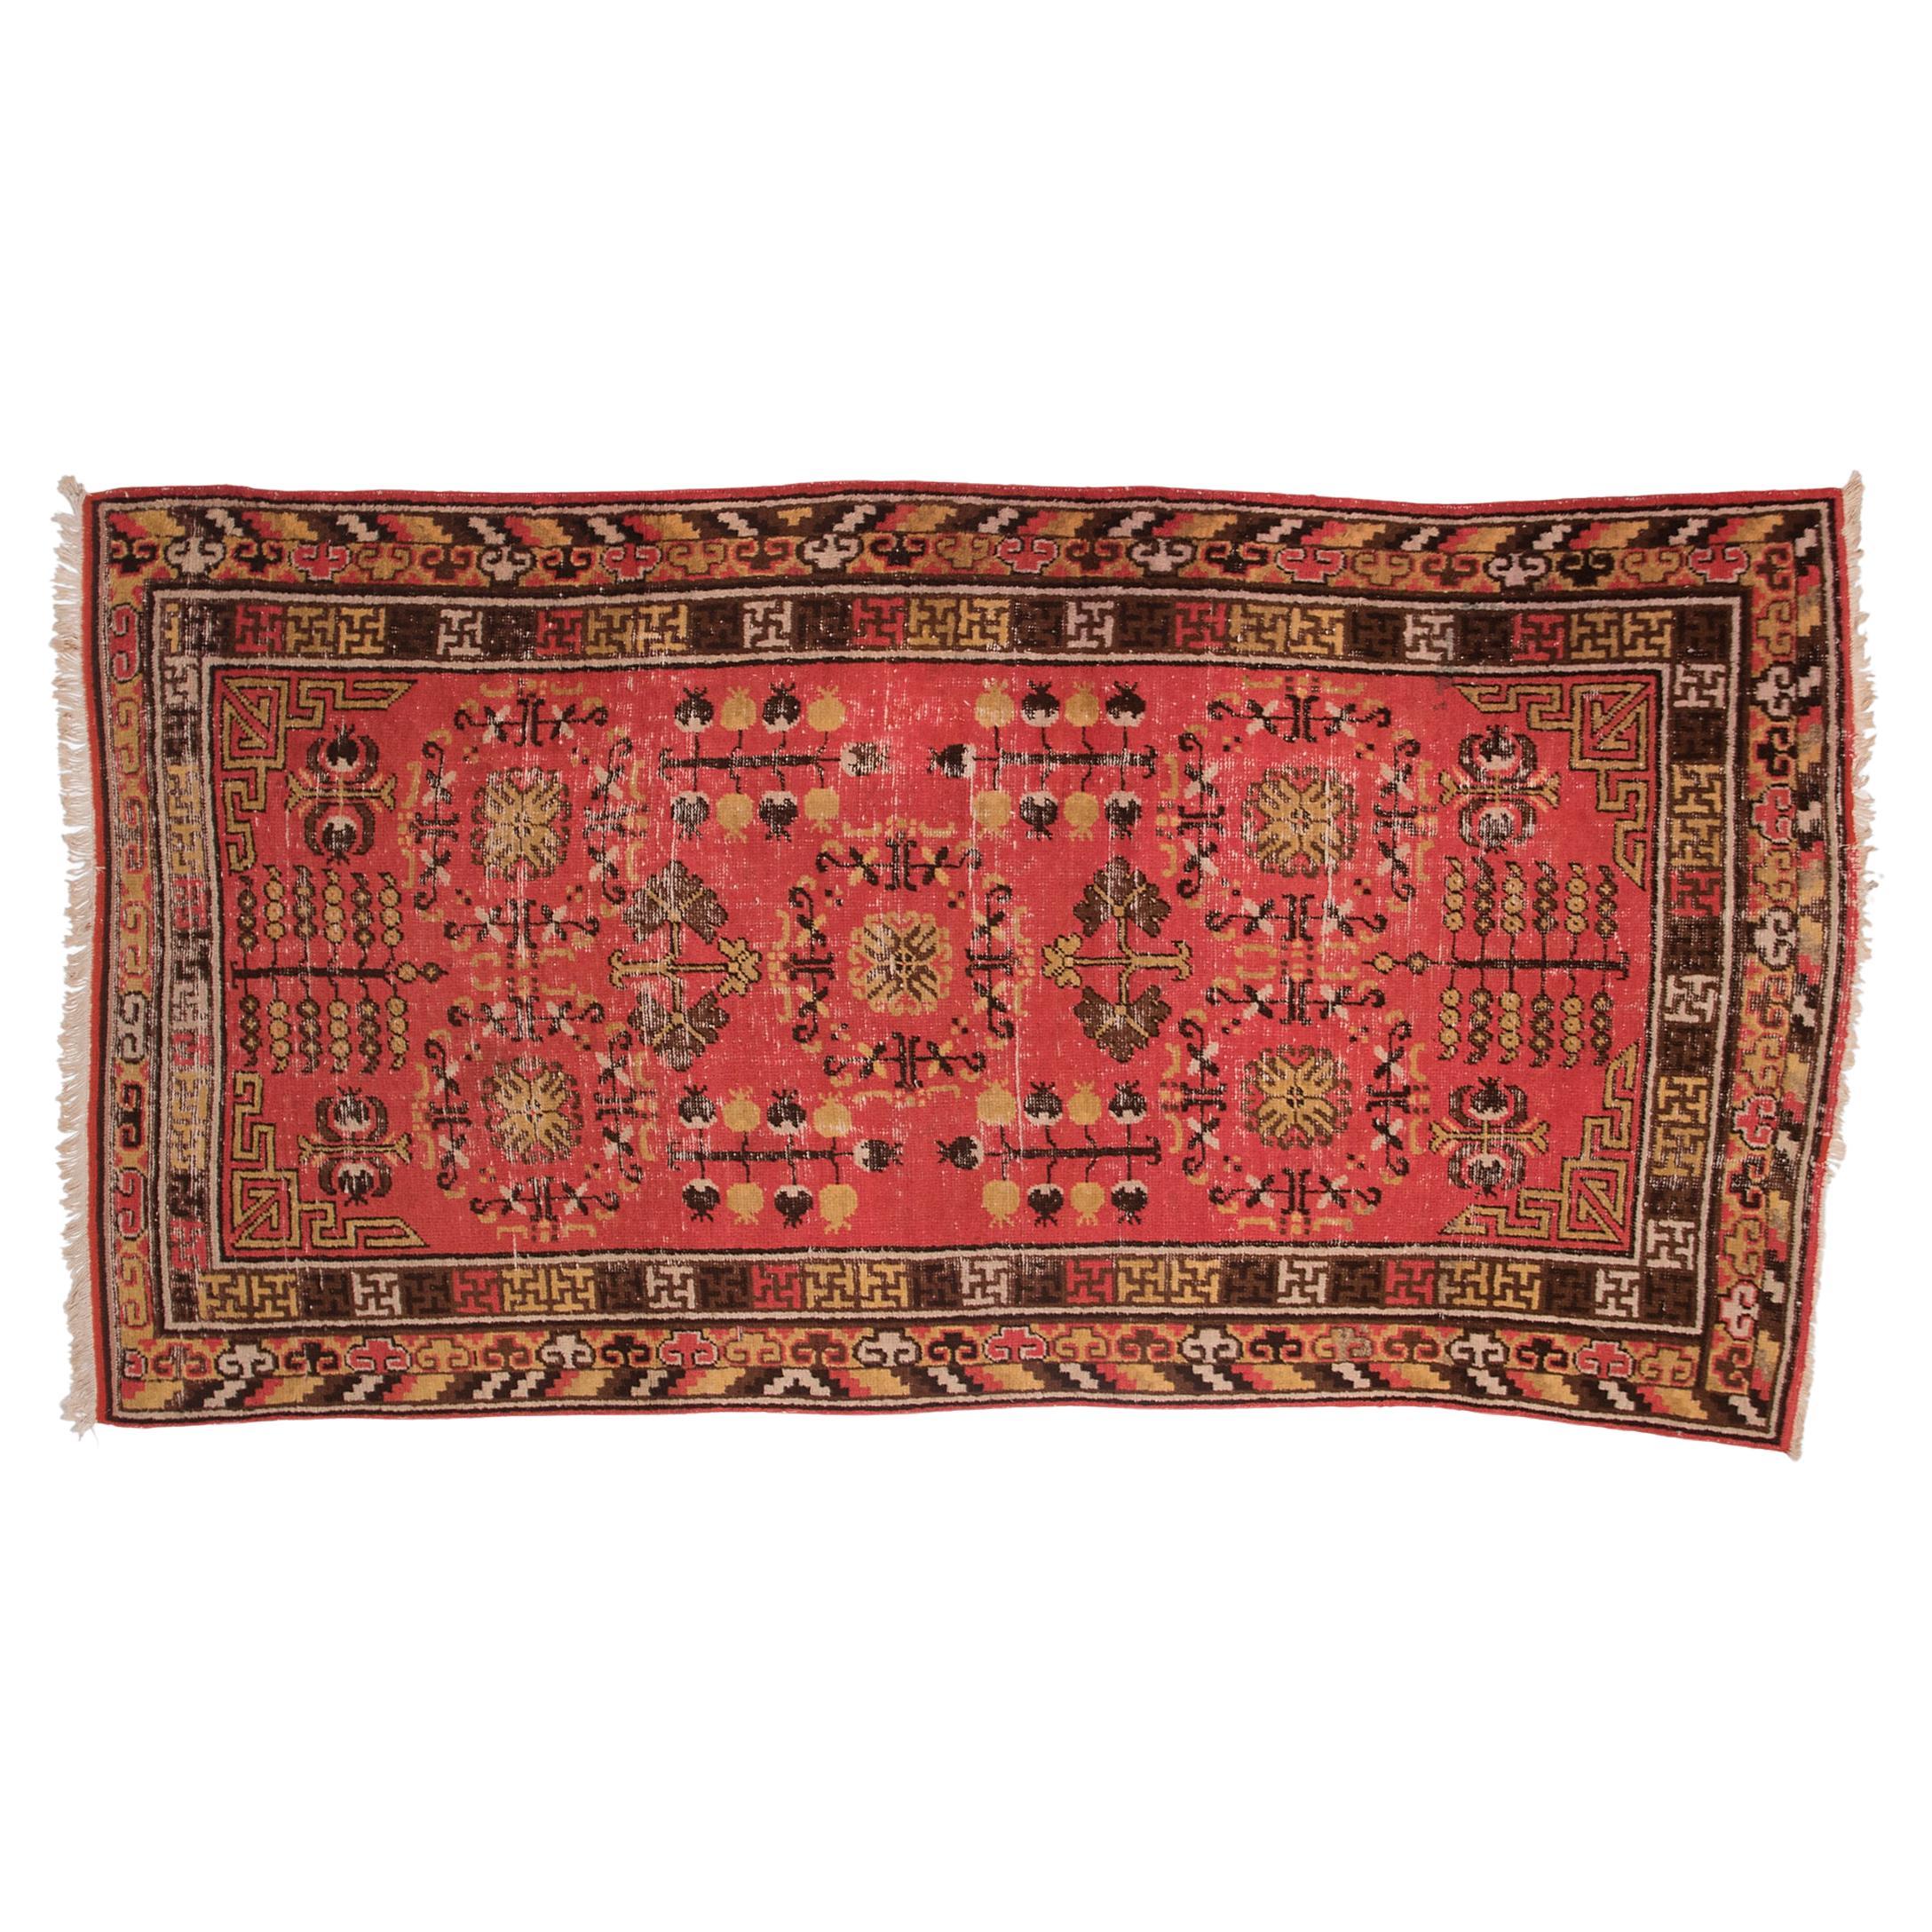 Antique Five Medallion Samarkand Carpet, c. 1920